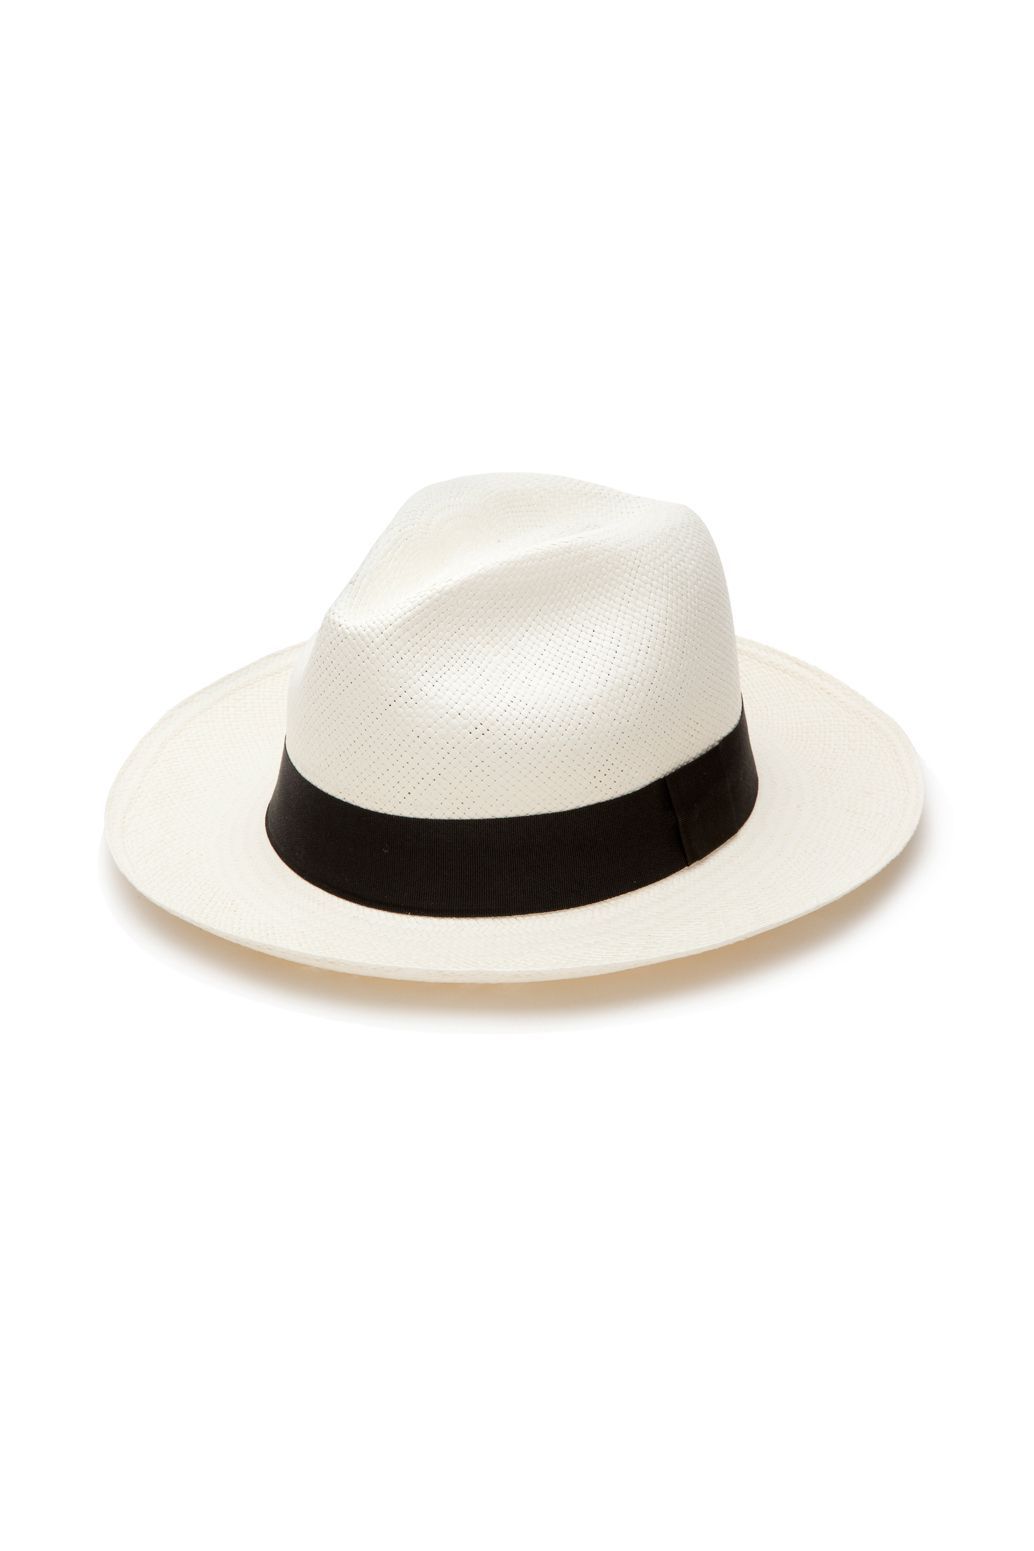 White & Black Panama Hat